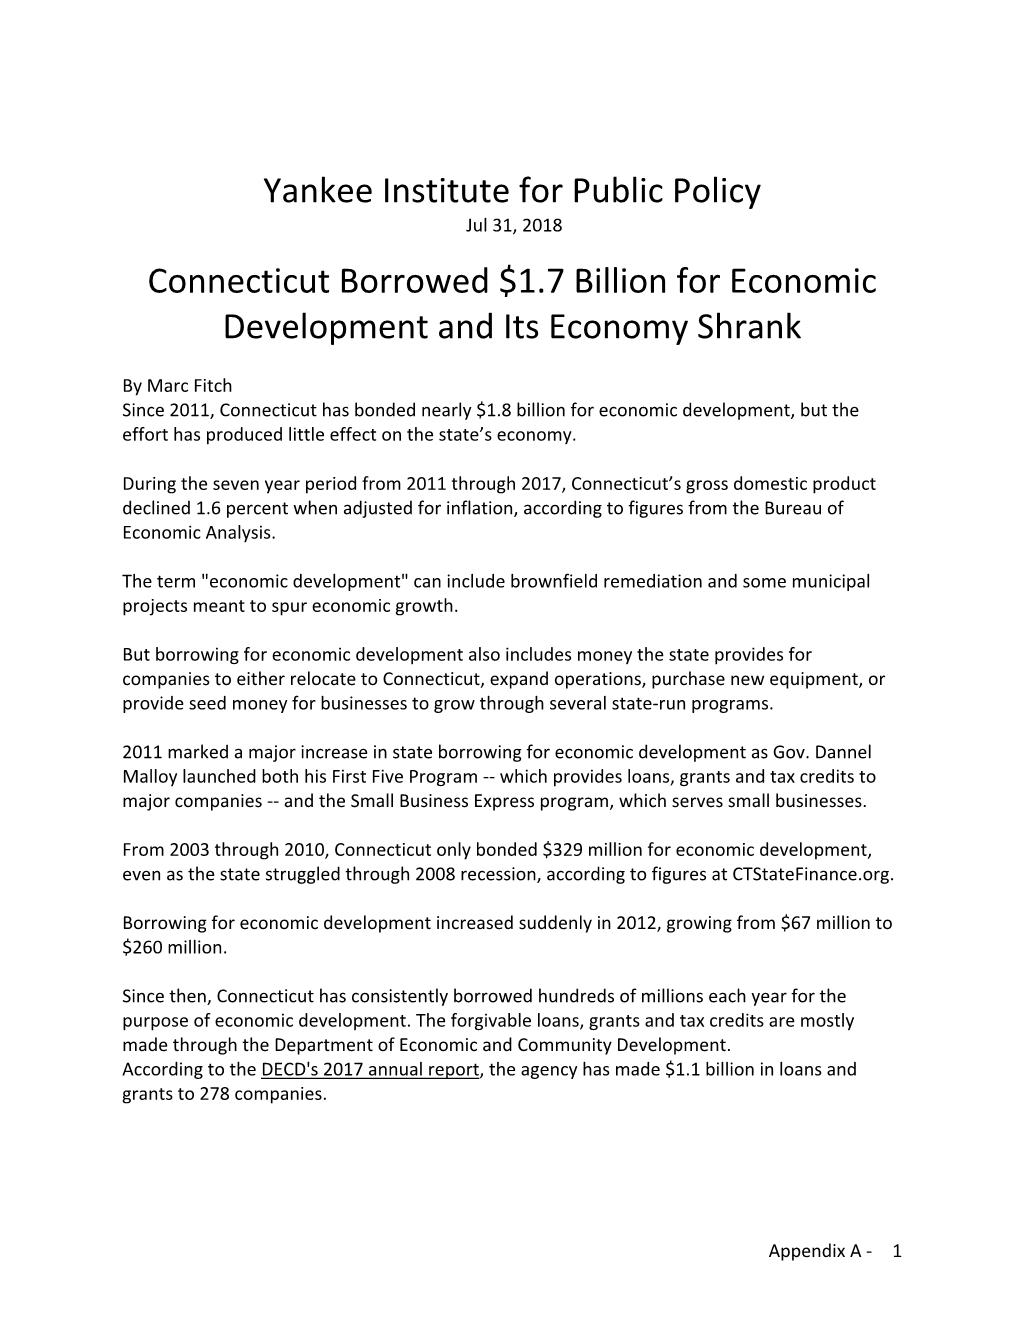 Connecticut Borrowed $1.7 Billion for Economic Development and Its Economy Shrank